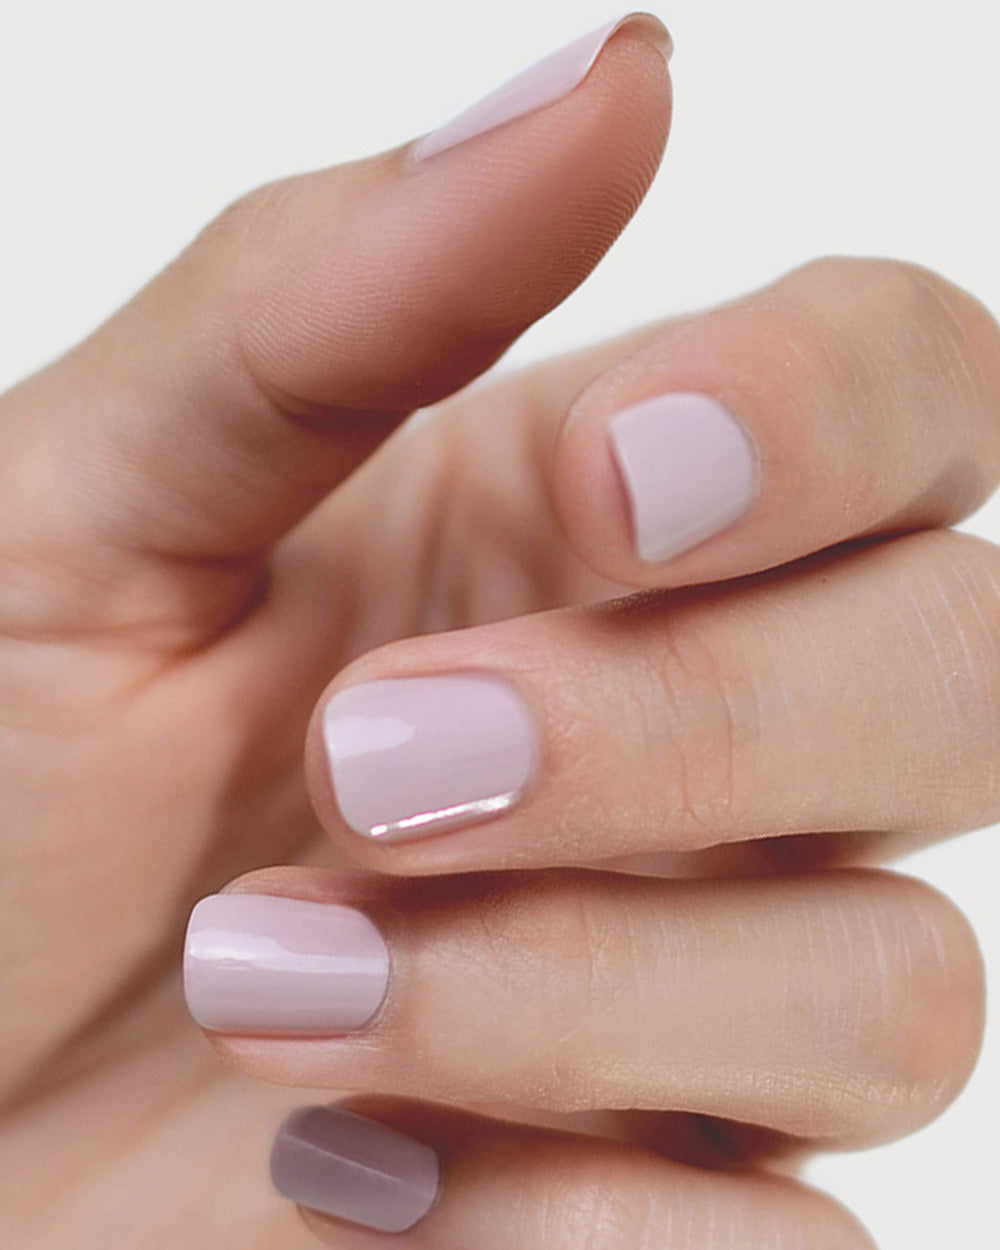 Tranquility Light Mauve Rose Crème nail polish by Sienna Byron Bay on fair skin tone hand.